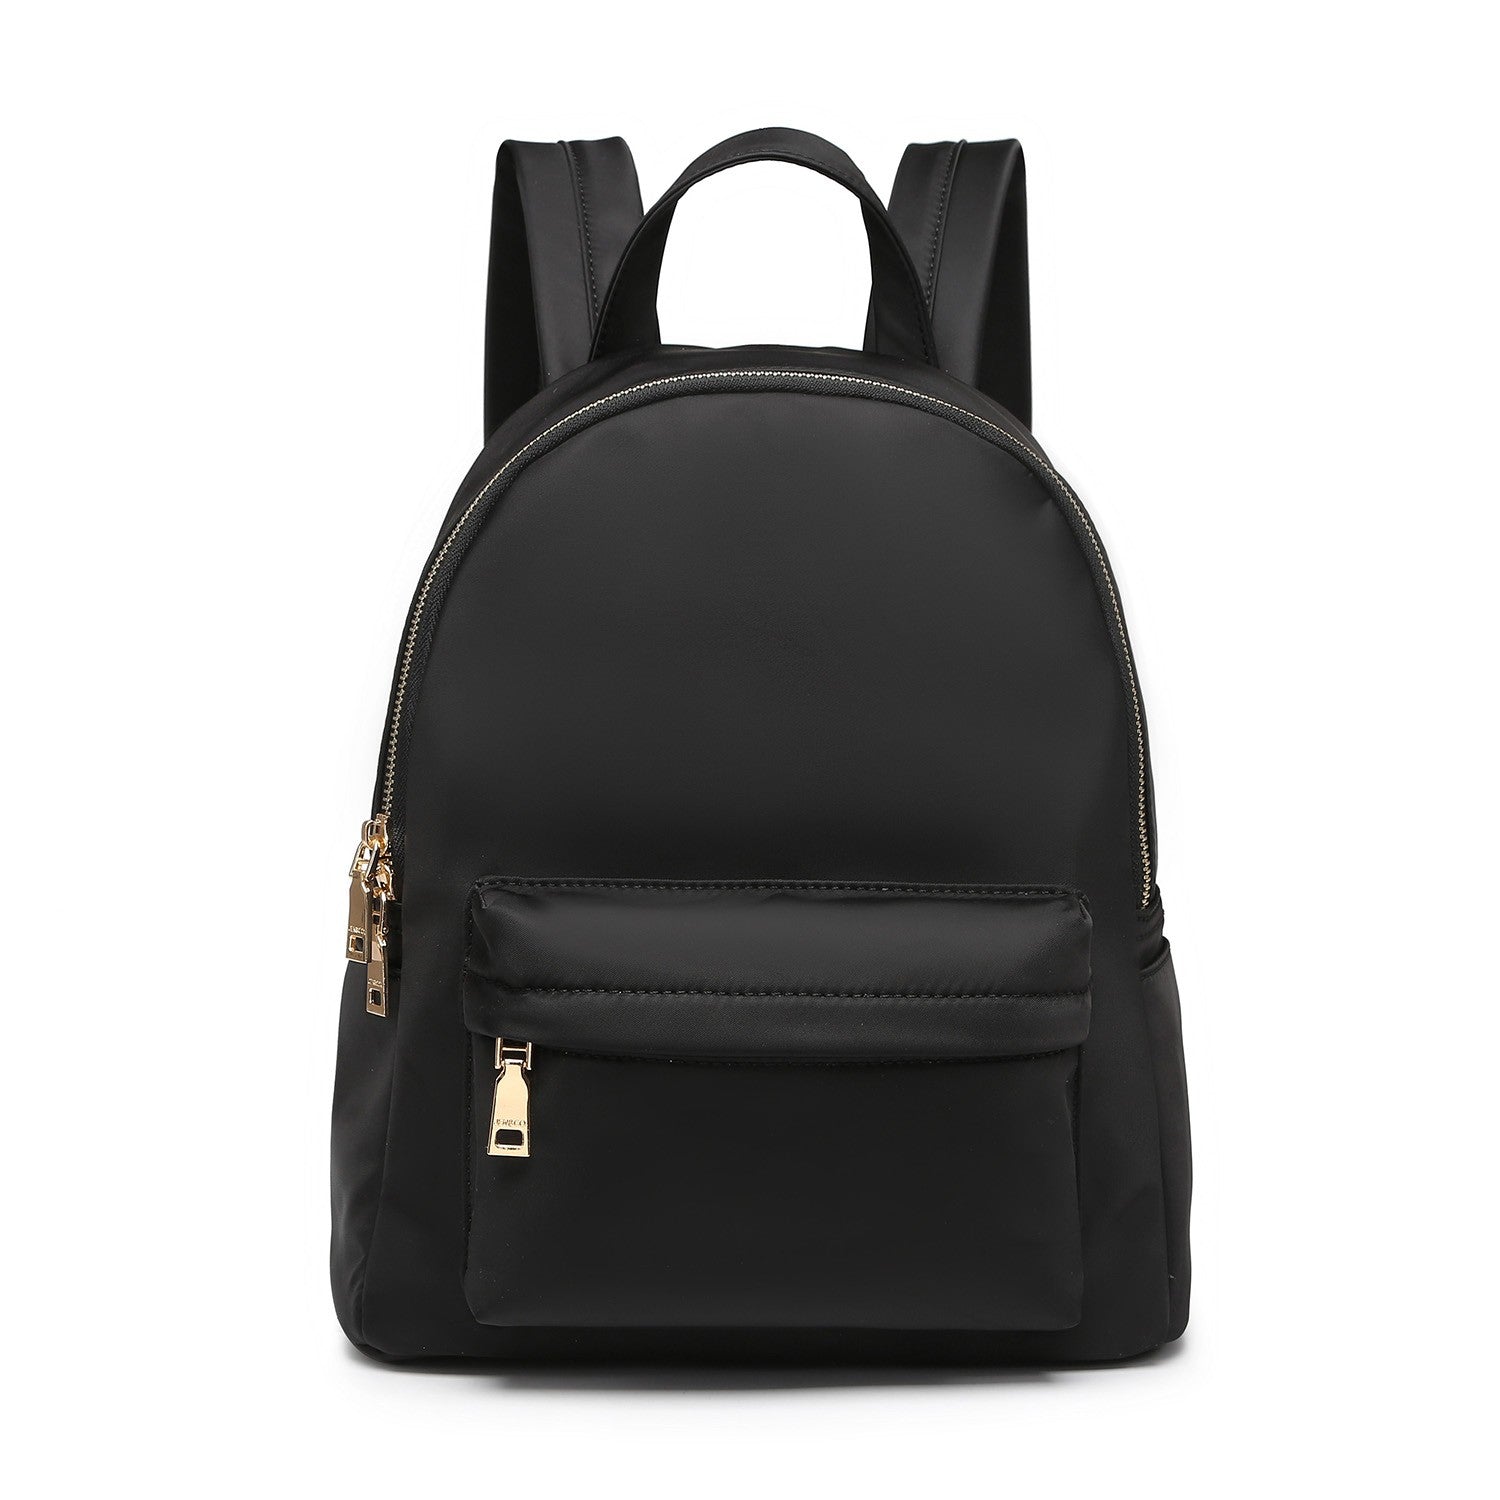 Phina Black Backpack Handbag